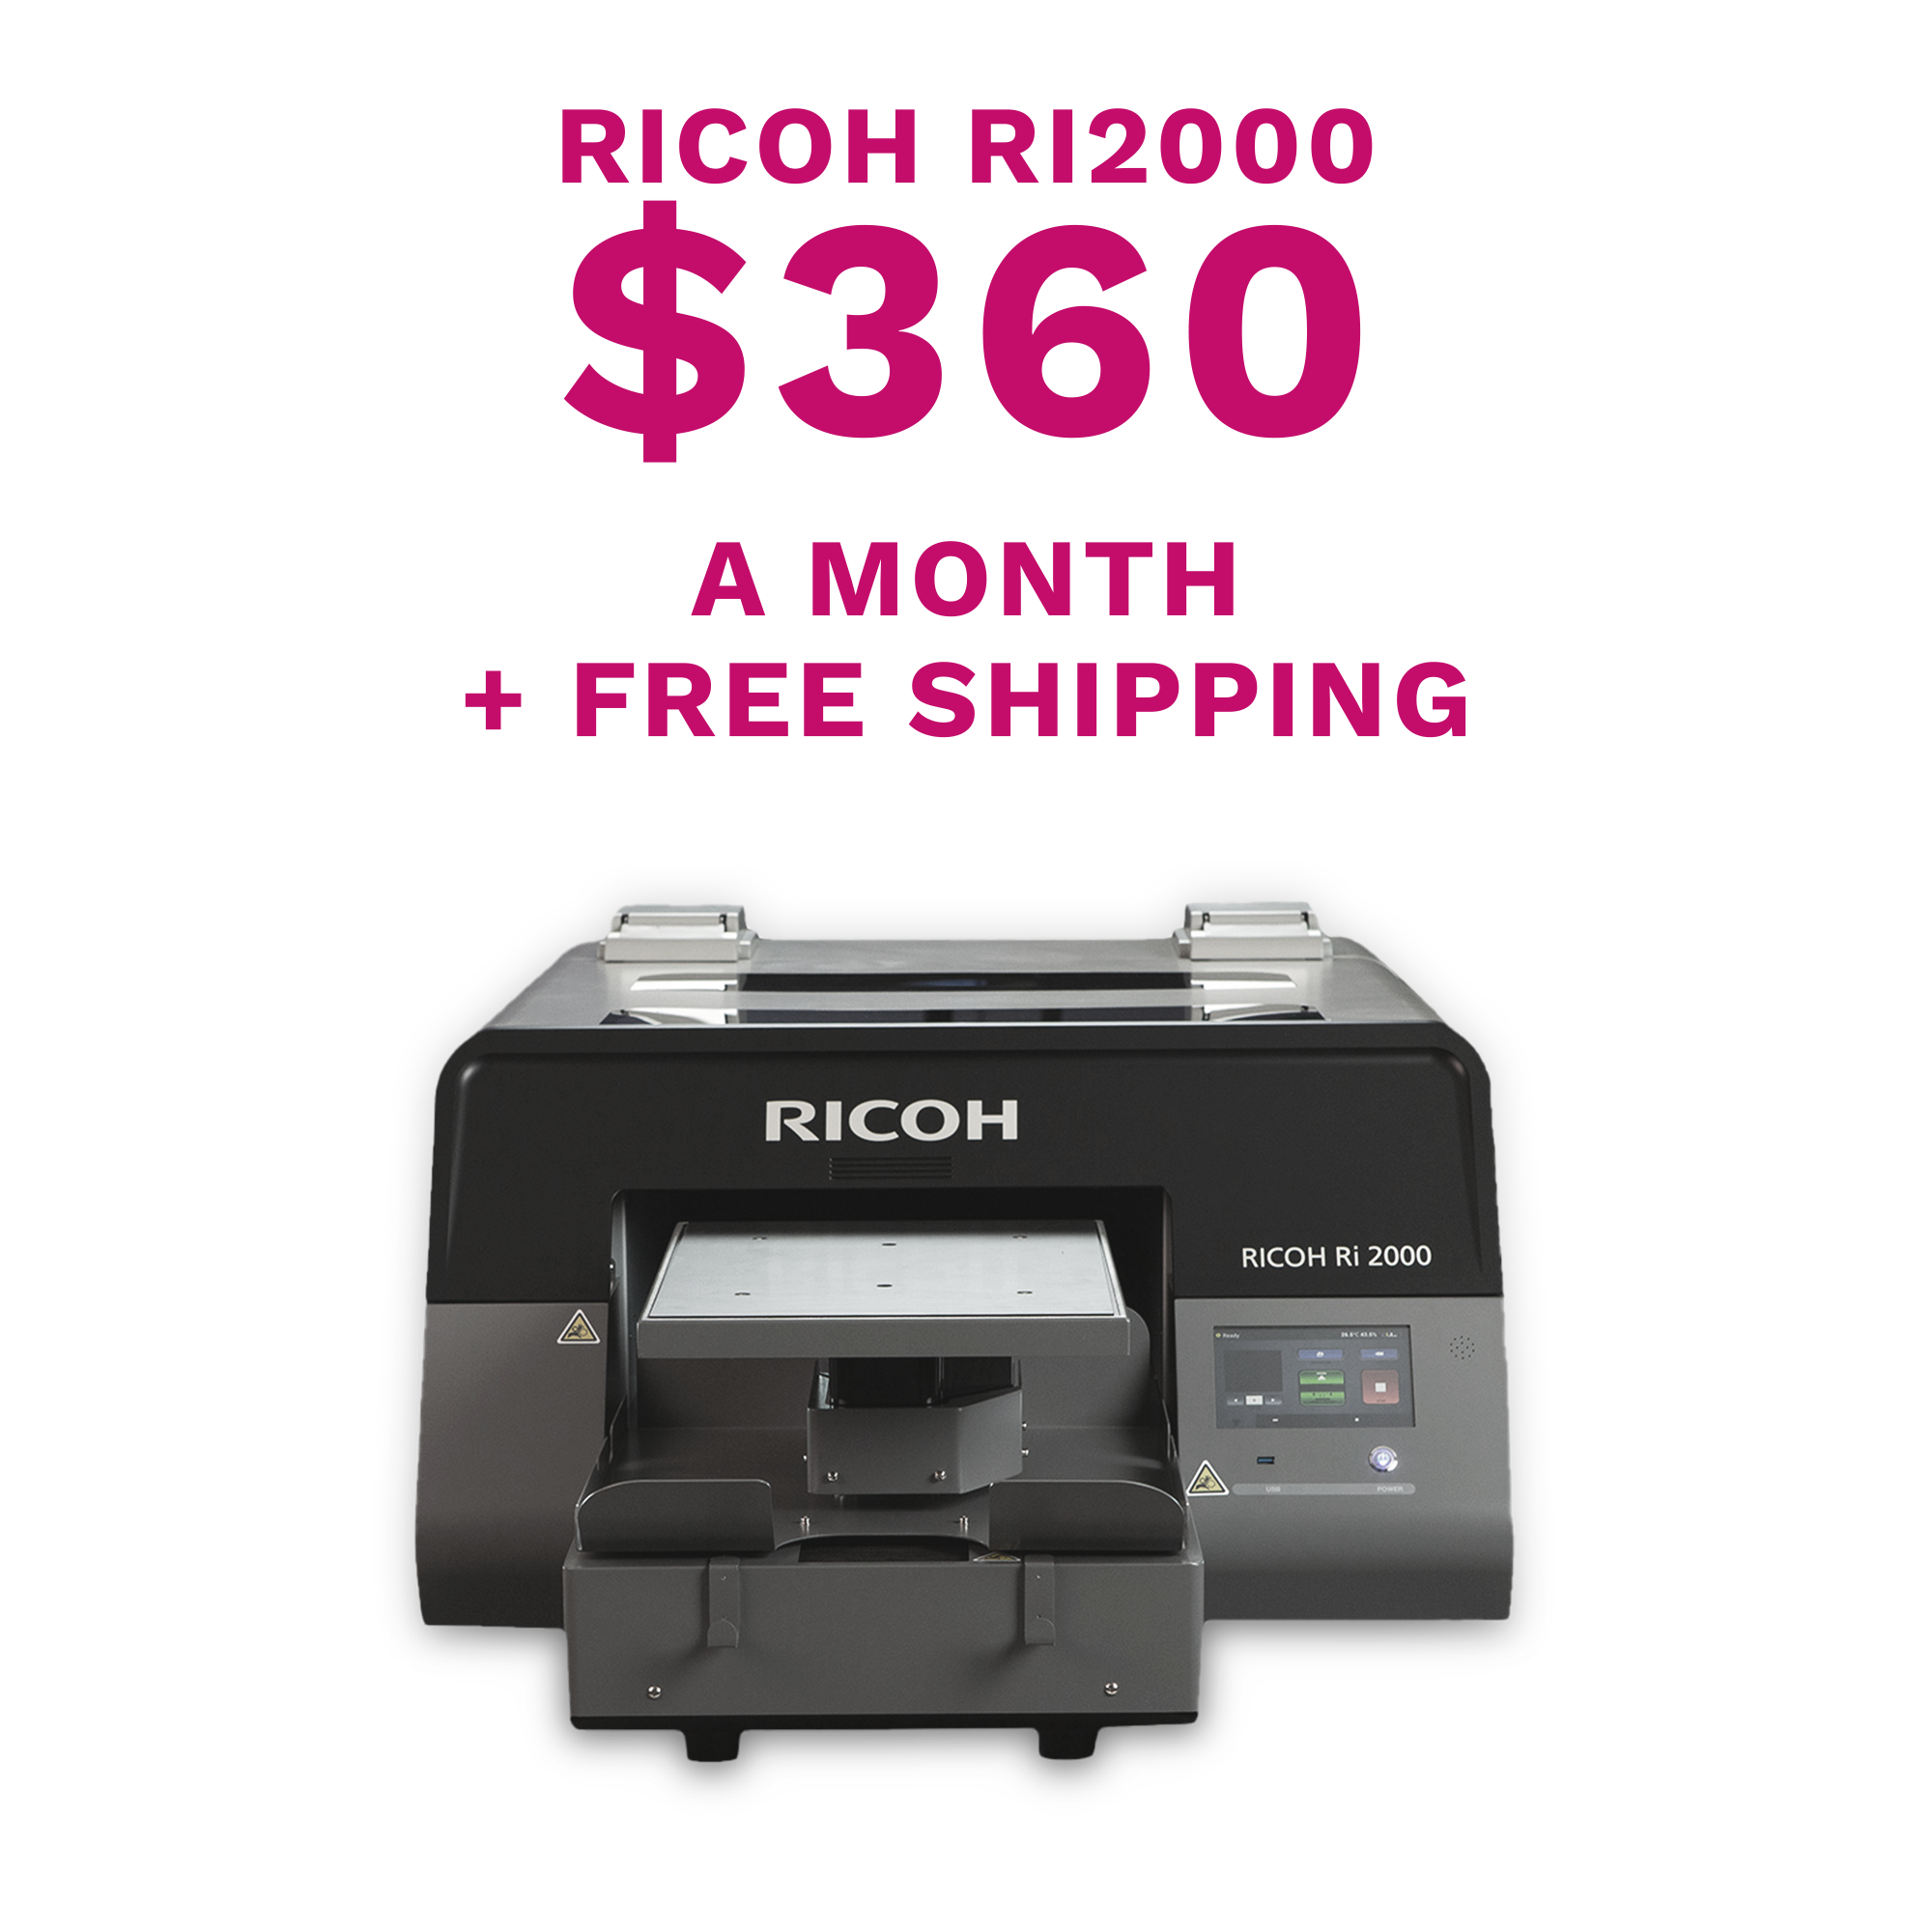 Ricoh Ri1000 Commercial Garment Printer Garment Printer